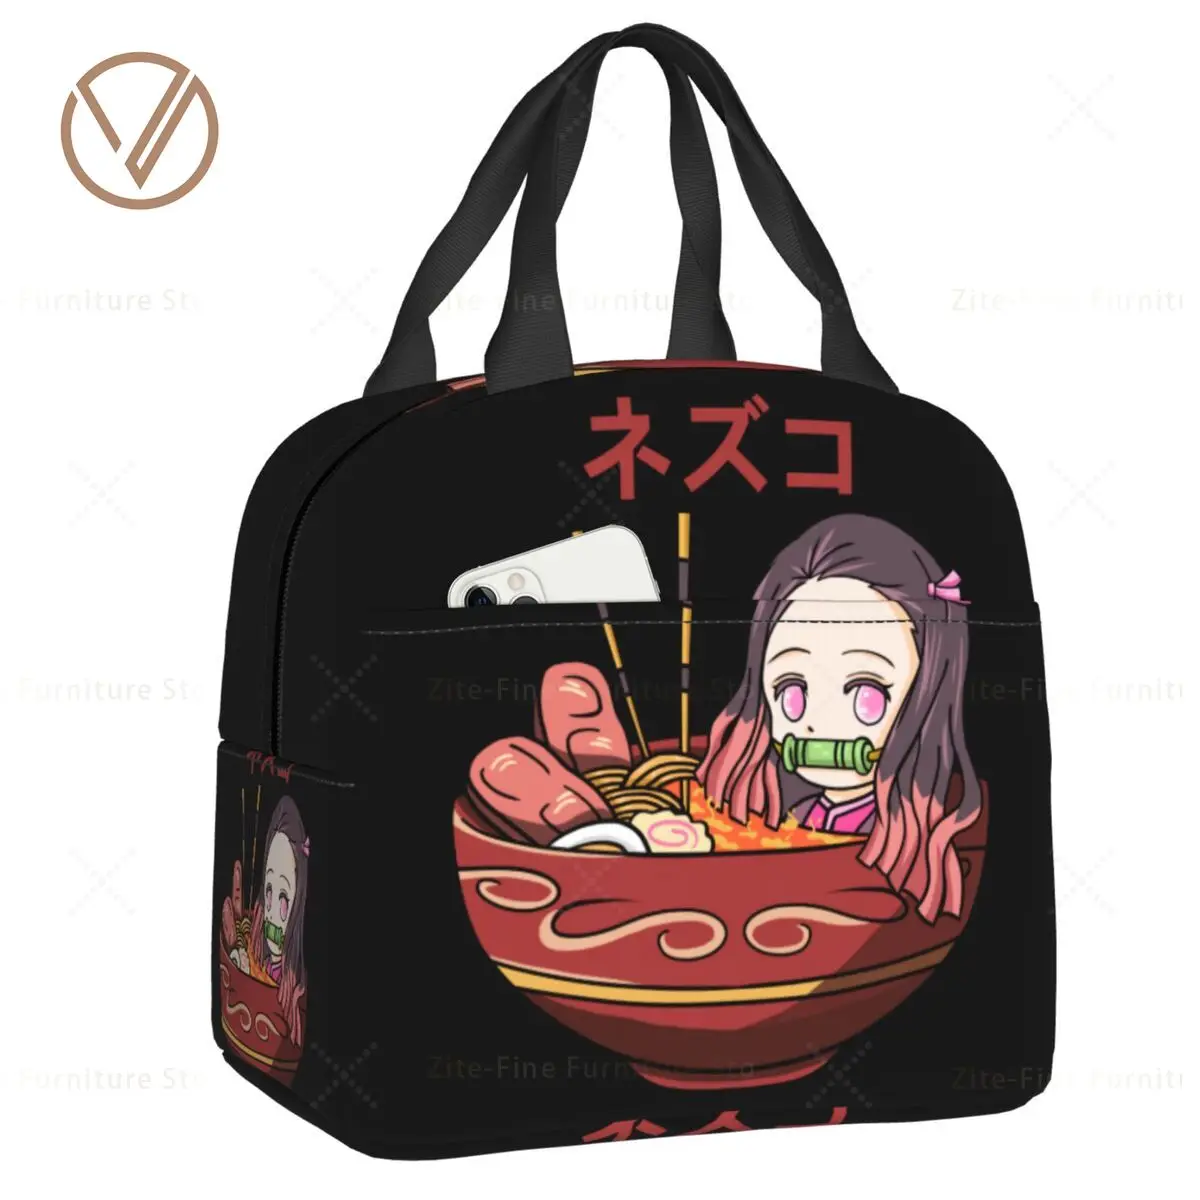 

Demon Slayer Kimetsu No Yaiba Insulated Lunch Tote Bag Anime Manga Ramen Nezuko Portable Thermal Cooler Food Lunch Box Work